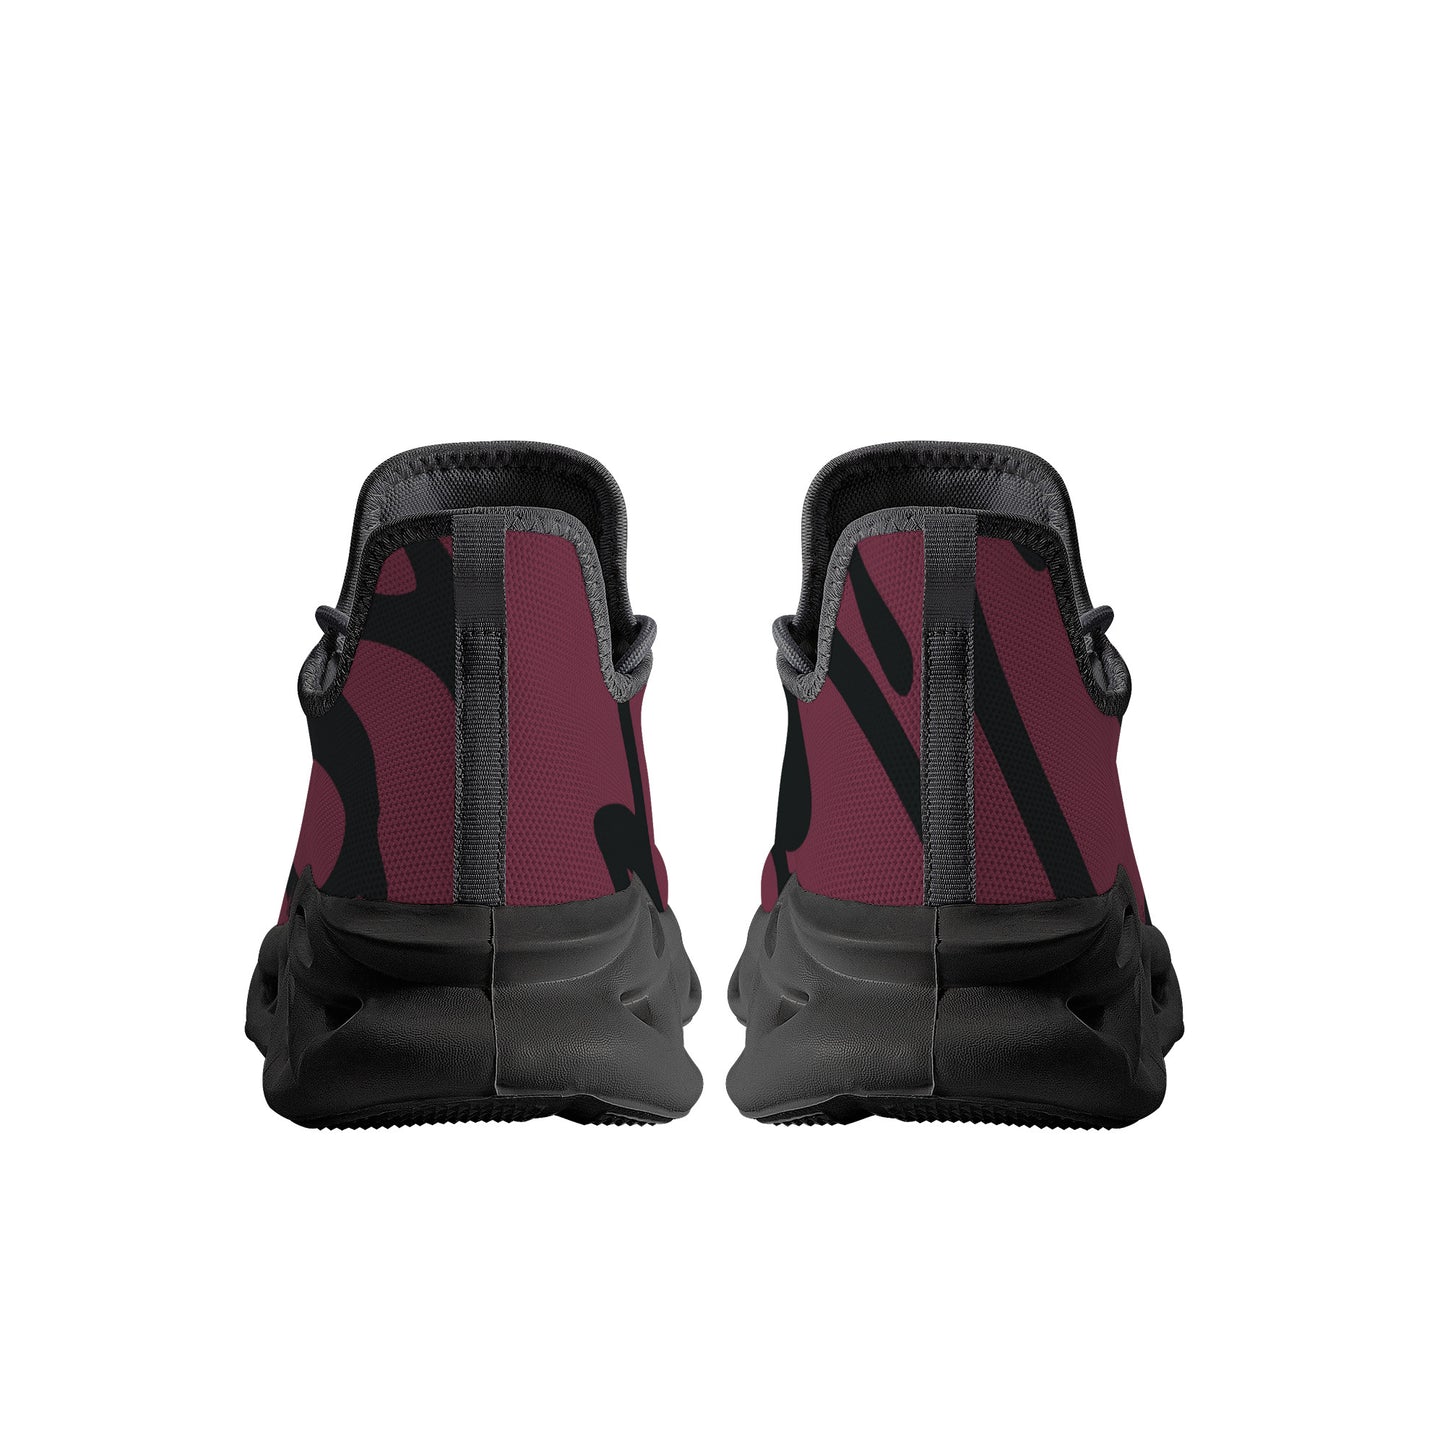 AZONTO Flex Control Sneaker - Black